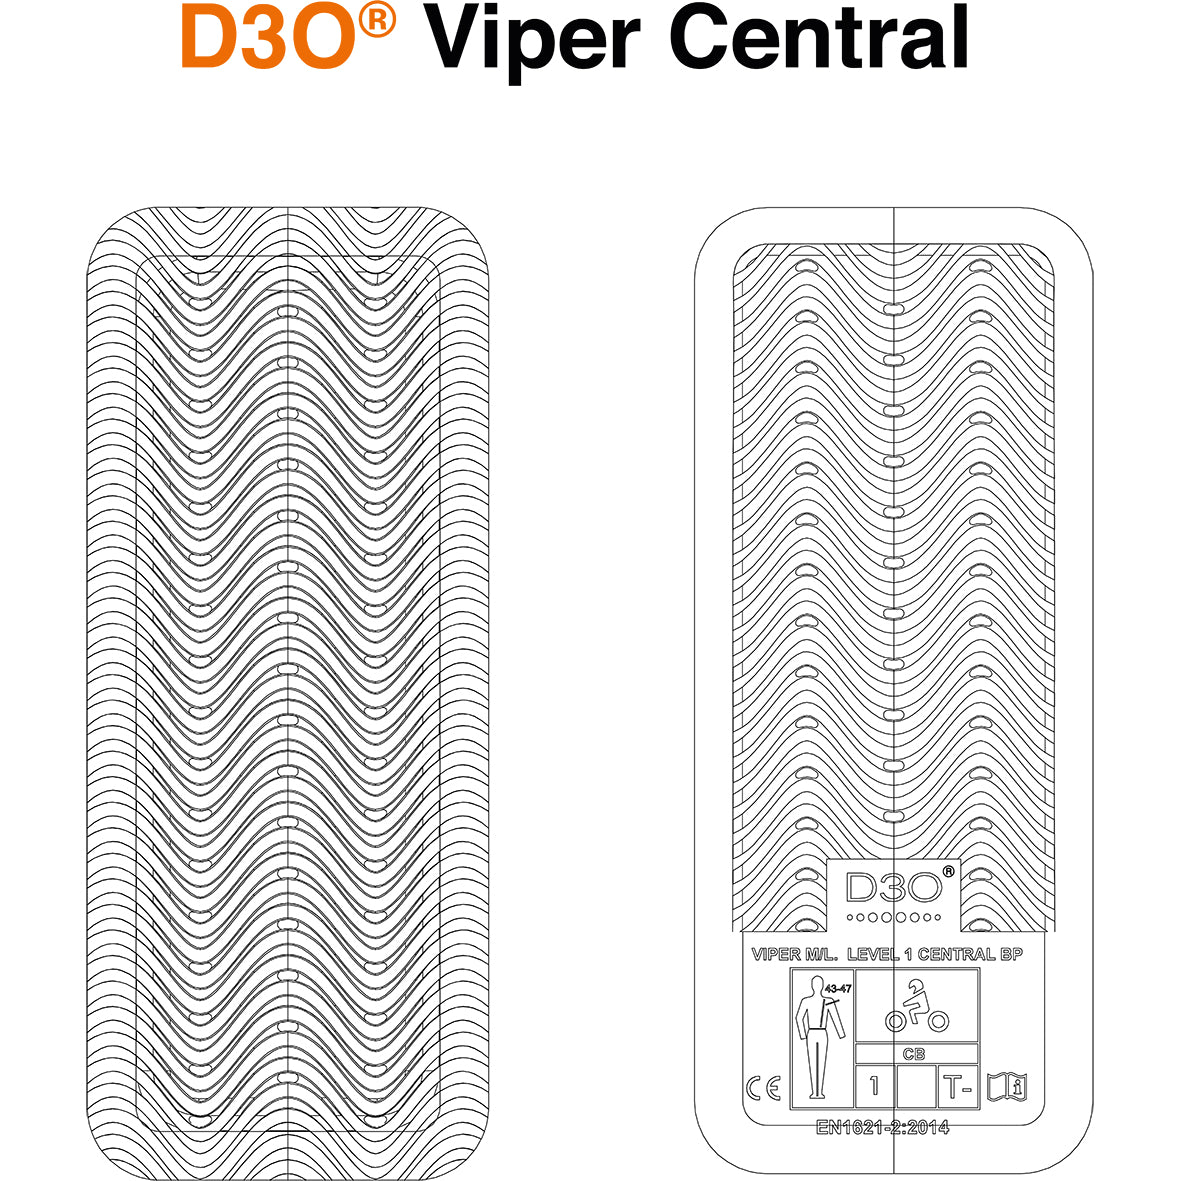 ICON D3O® Viper Central Back Impact Protector